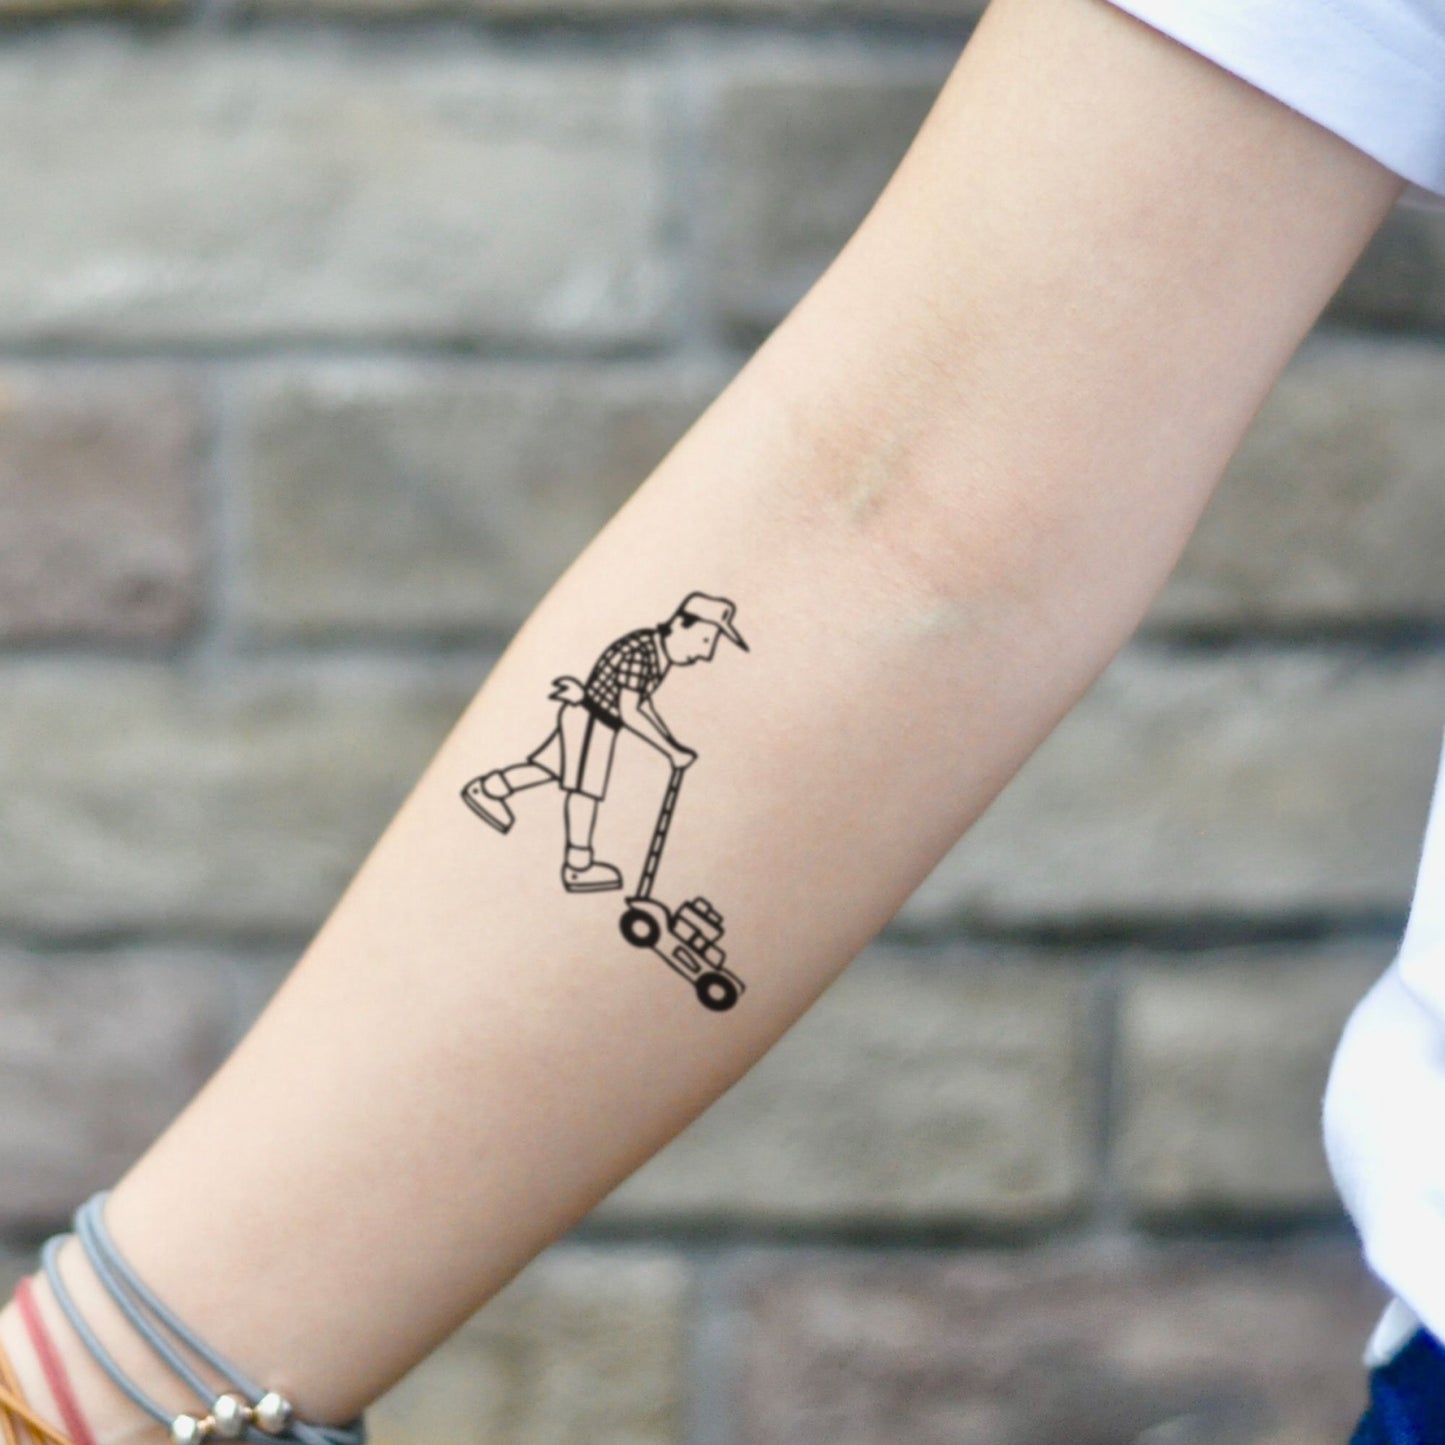 fake small lawn mower illustrative temporary tattoo sticker design idea on inner arm